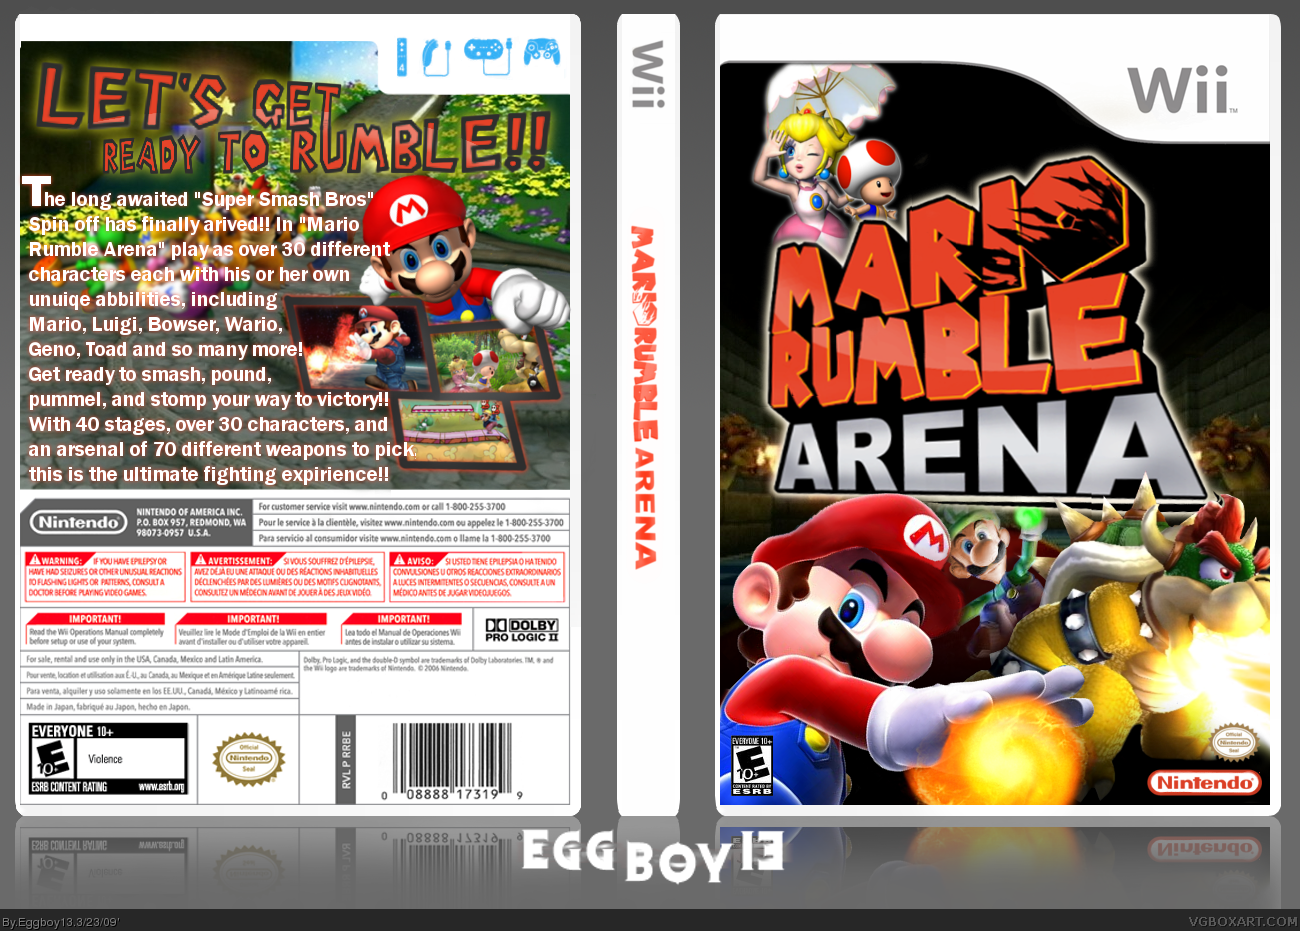 Mario Battle Arena box cover